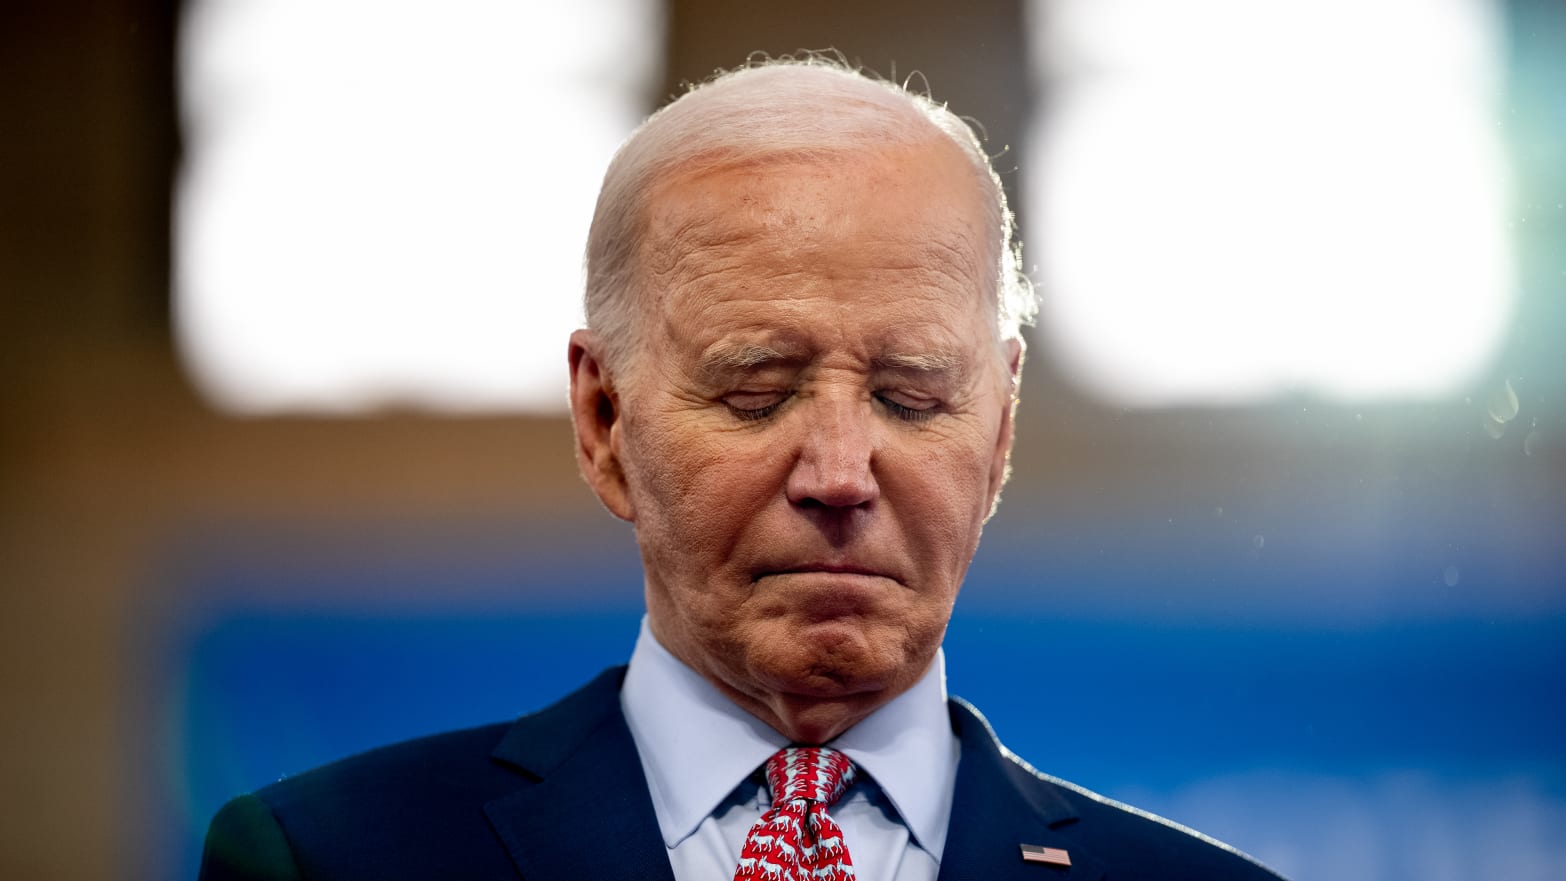 Joe Biden looking down in consternation